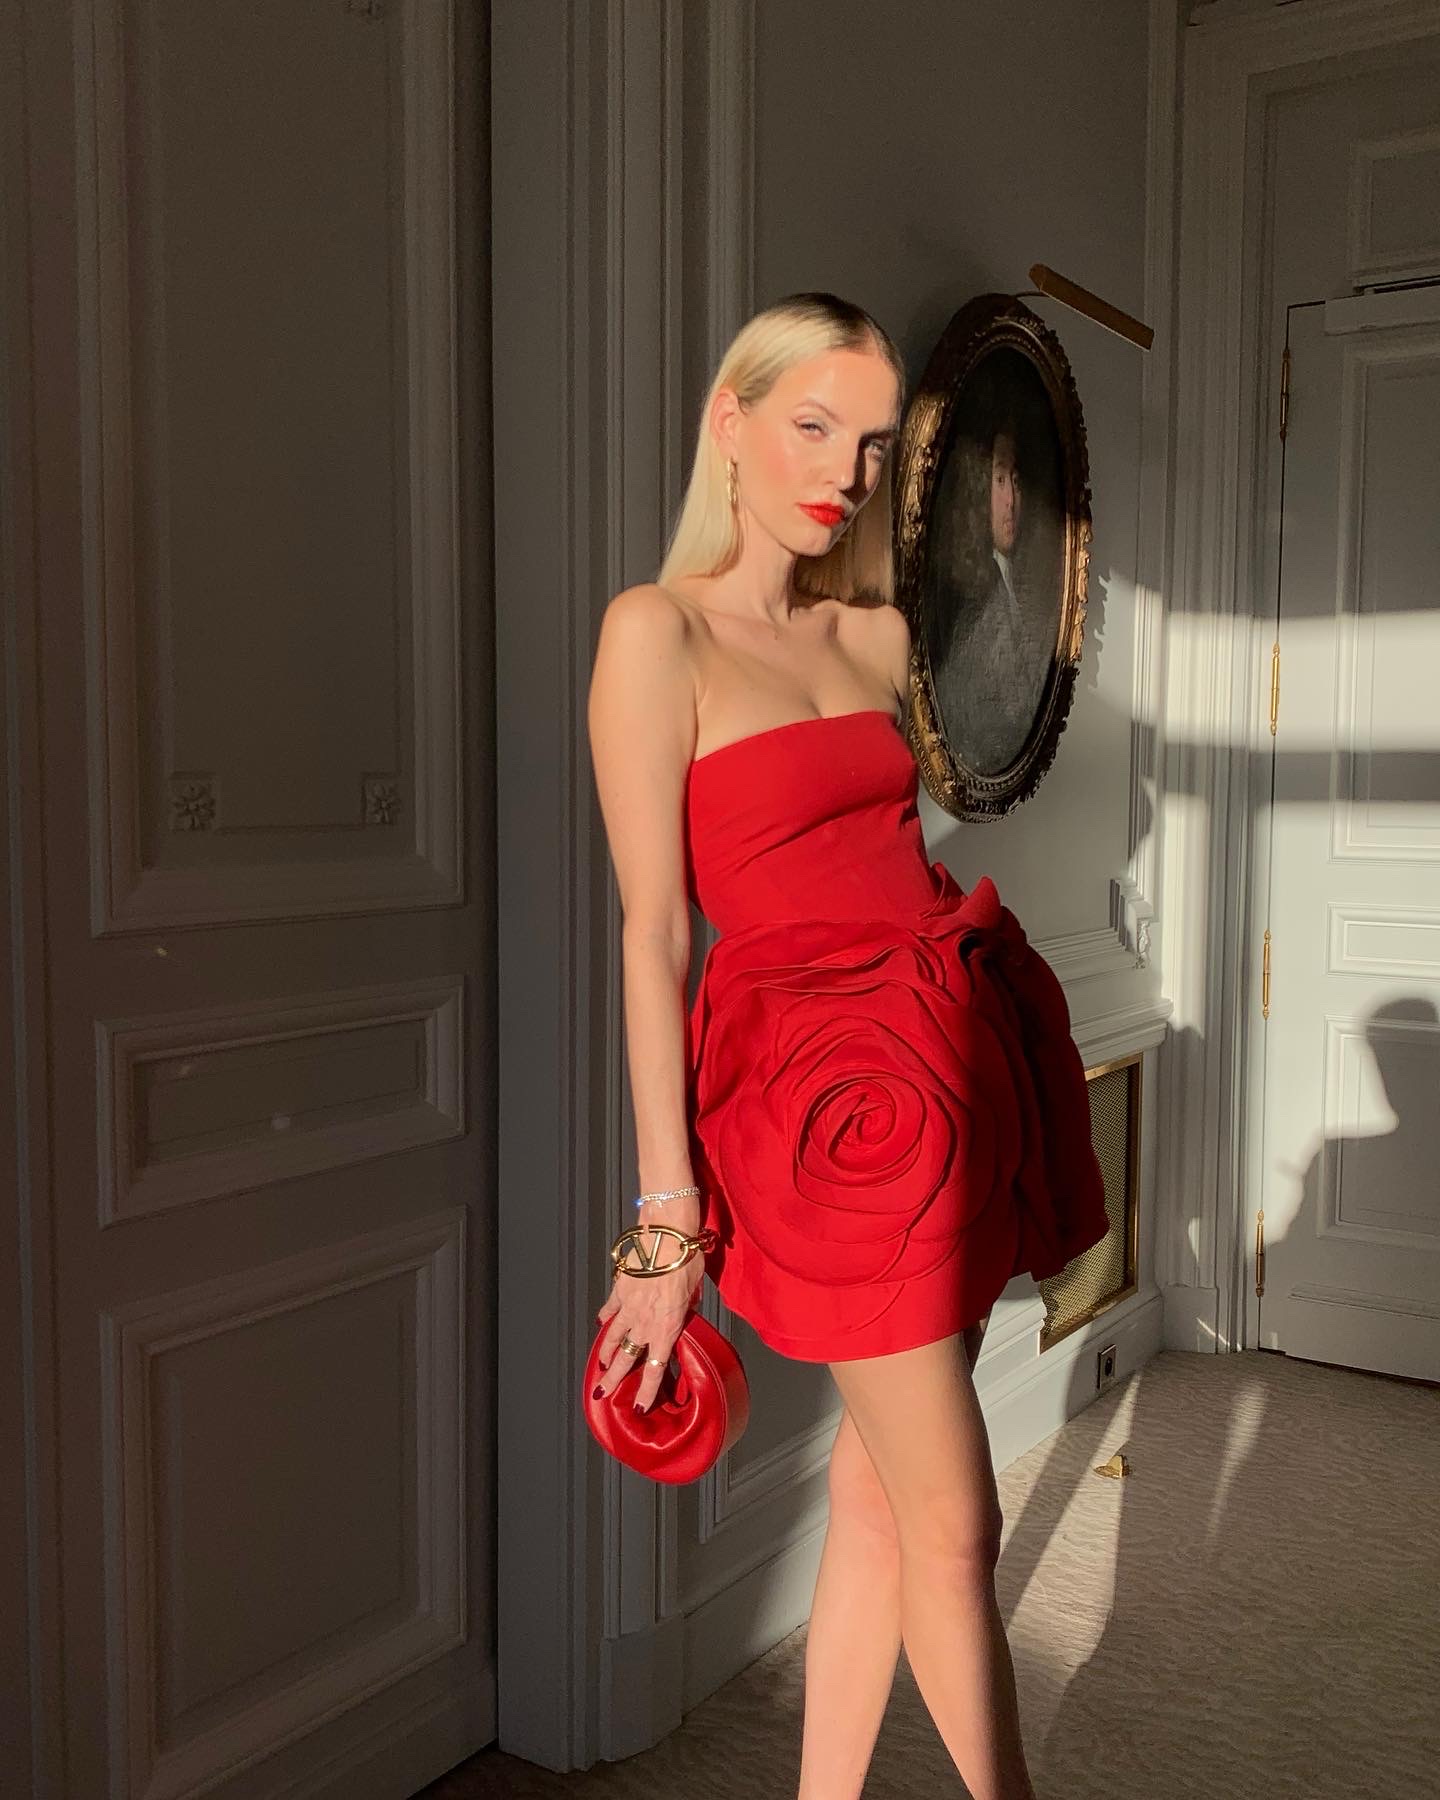 Valentino red rose dress in Paris